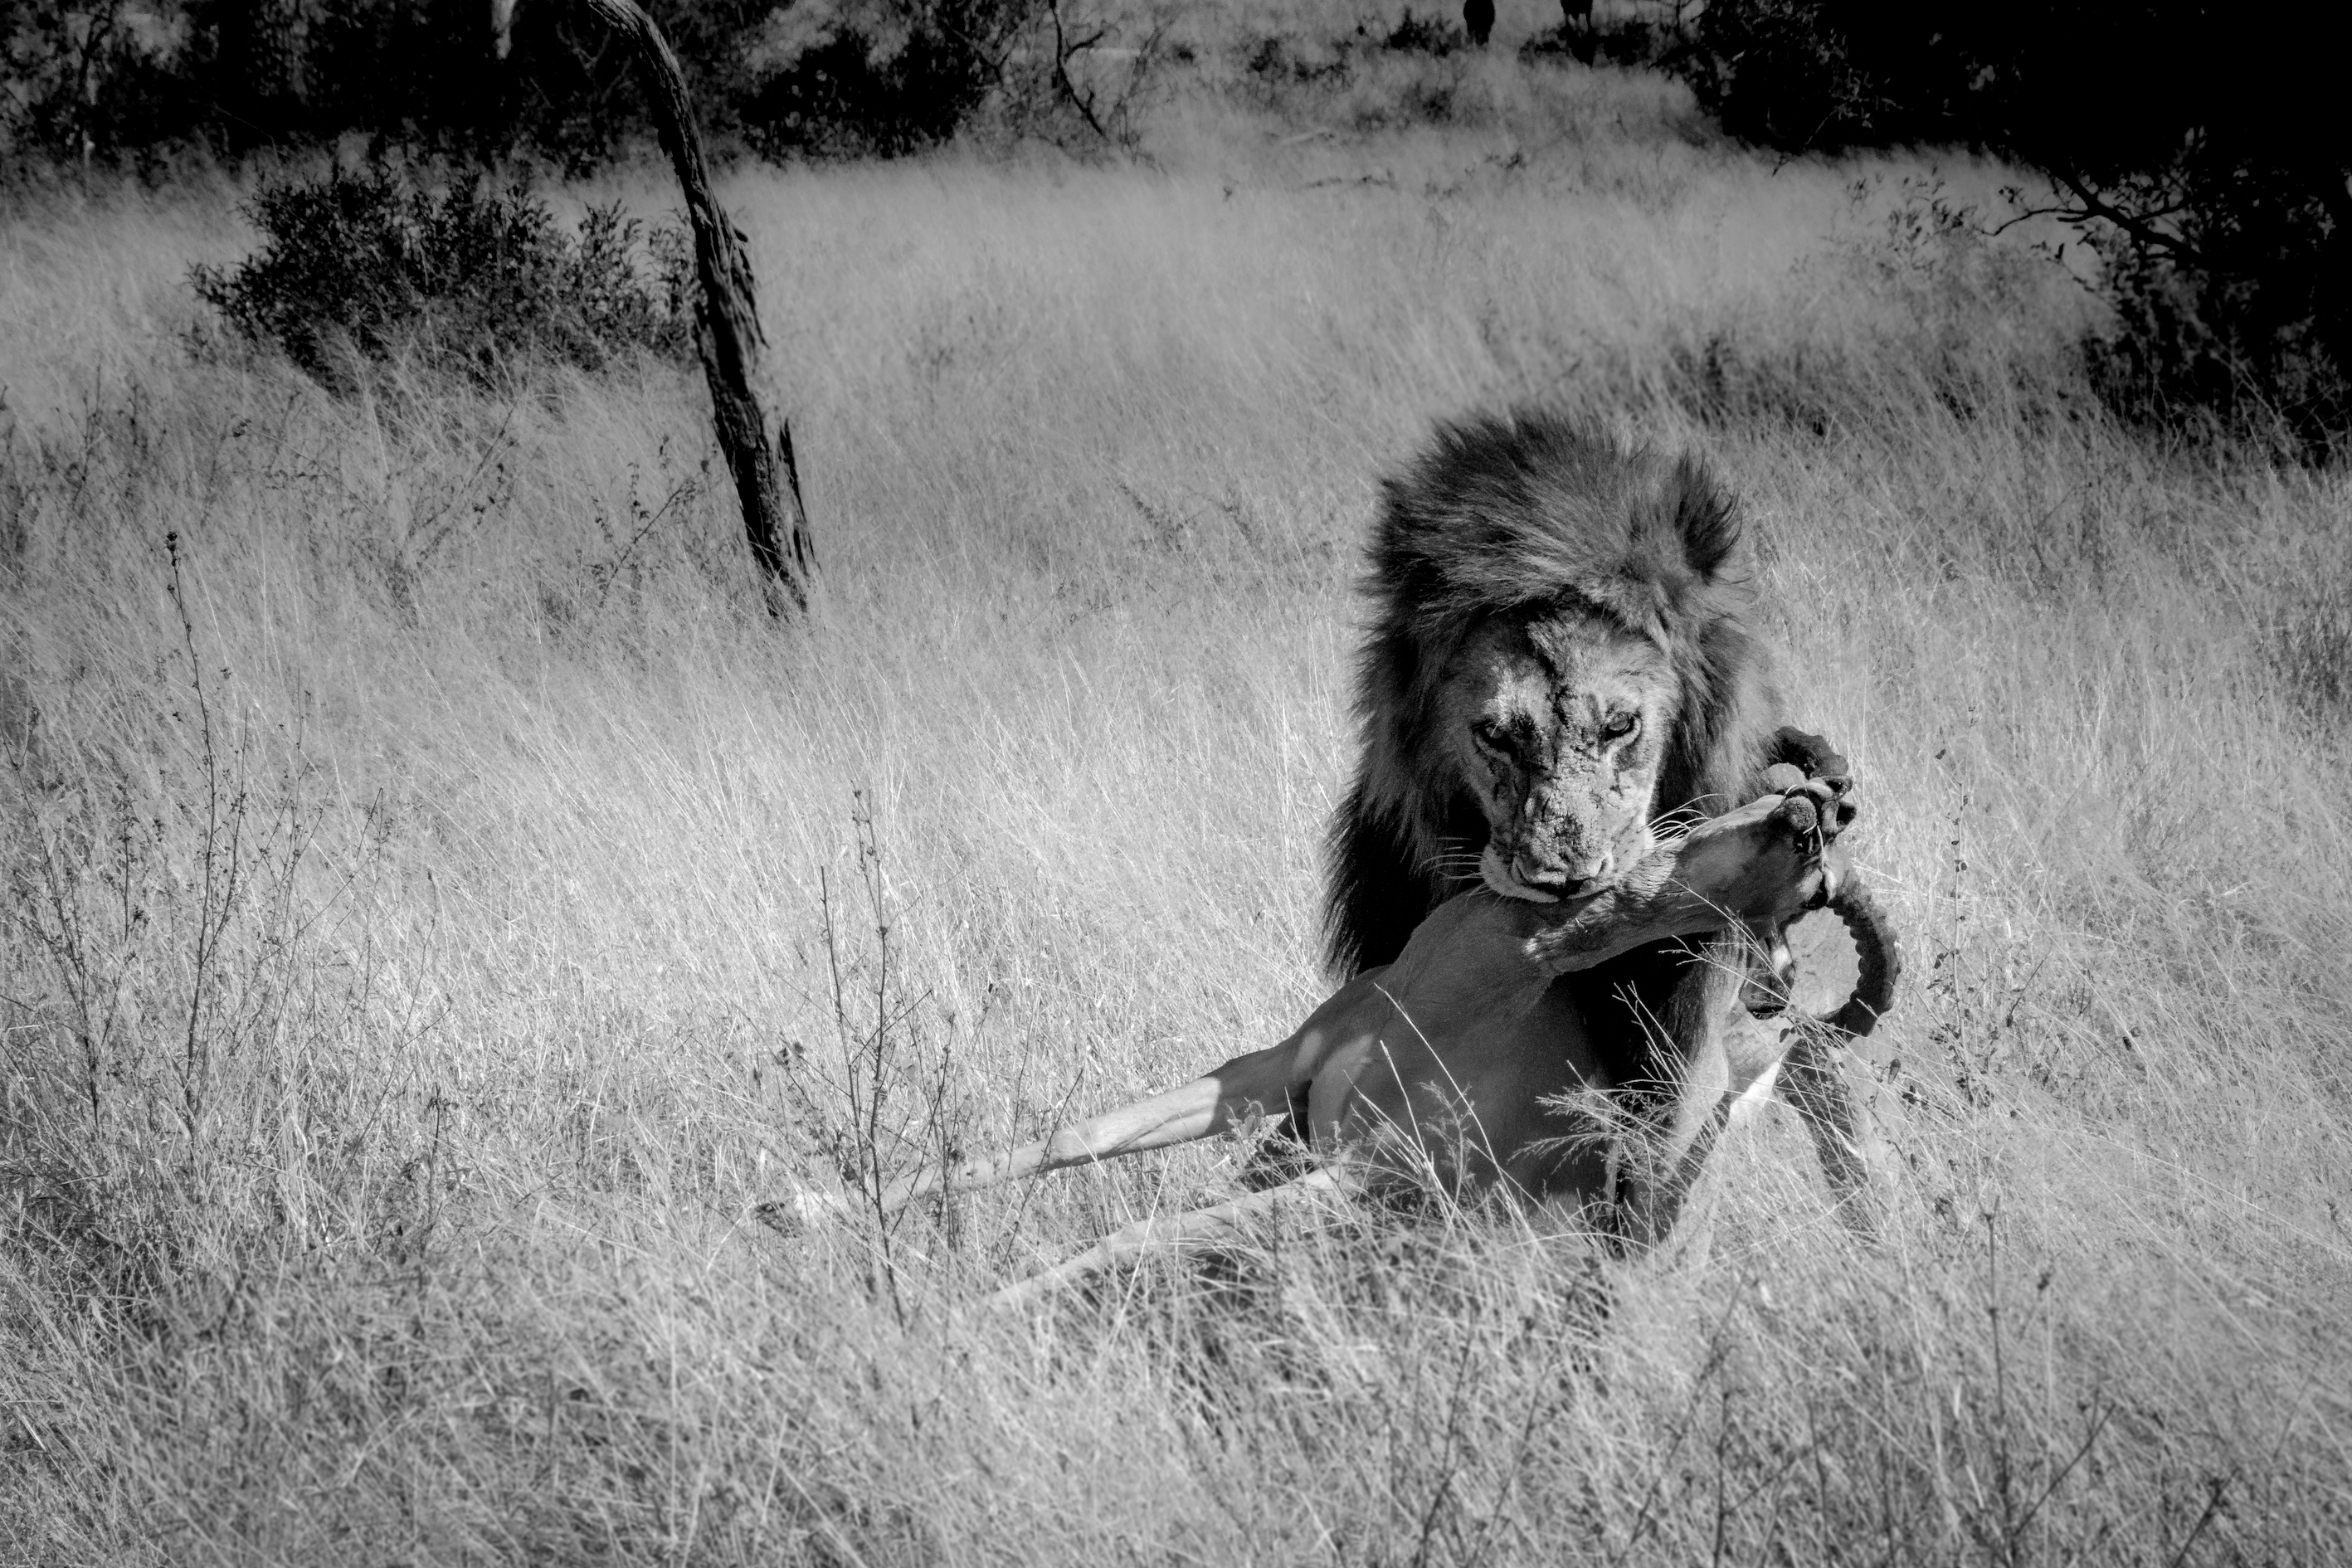 General 2835x1890 nature landscape monochrome animals lion gazelle Africa wildlife field grass big cats feline hunting